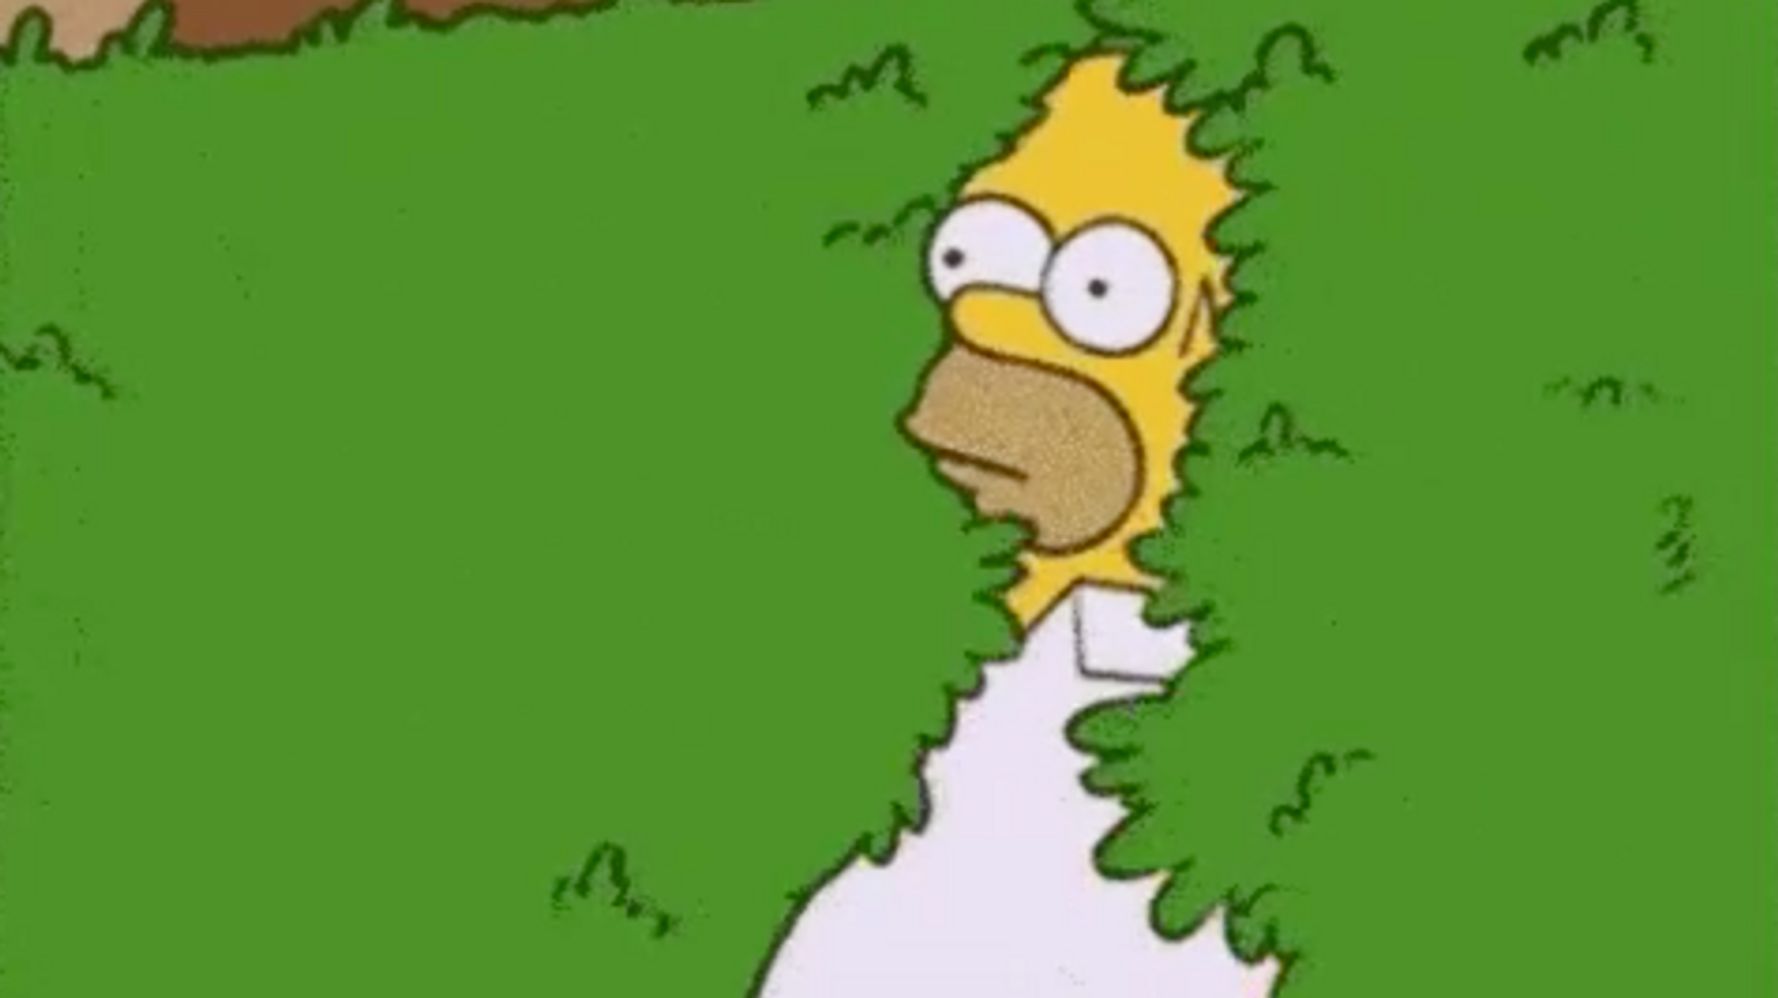 Homer Simpson backs into bushes